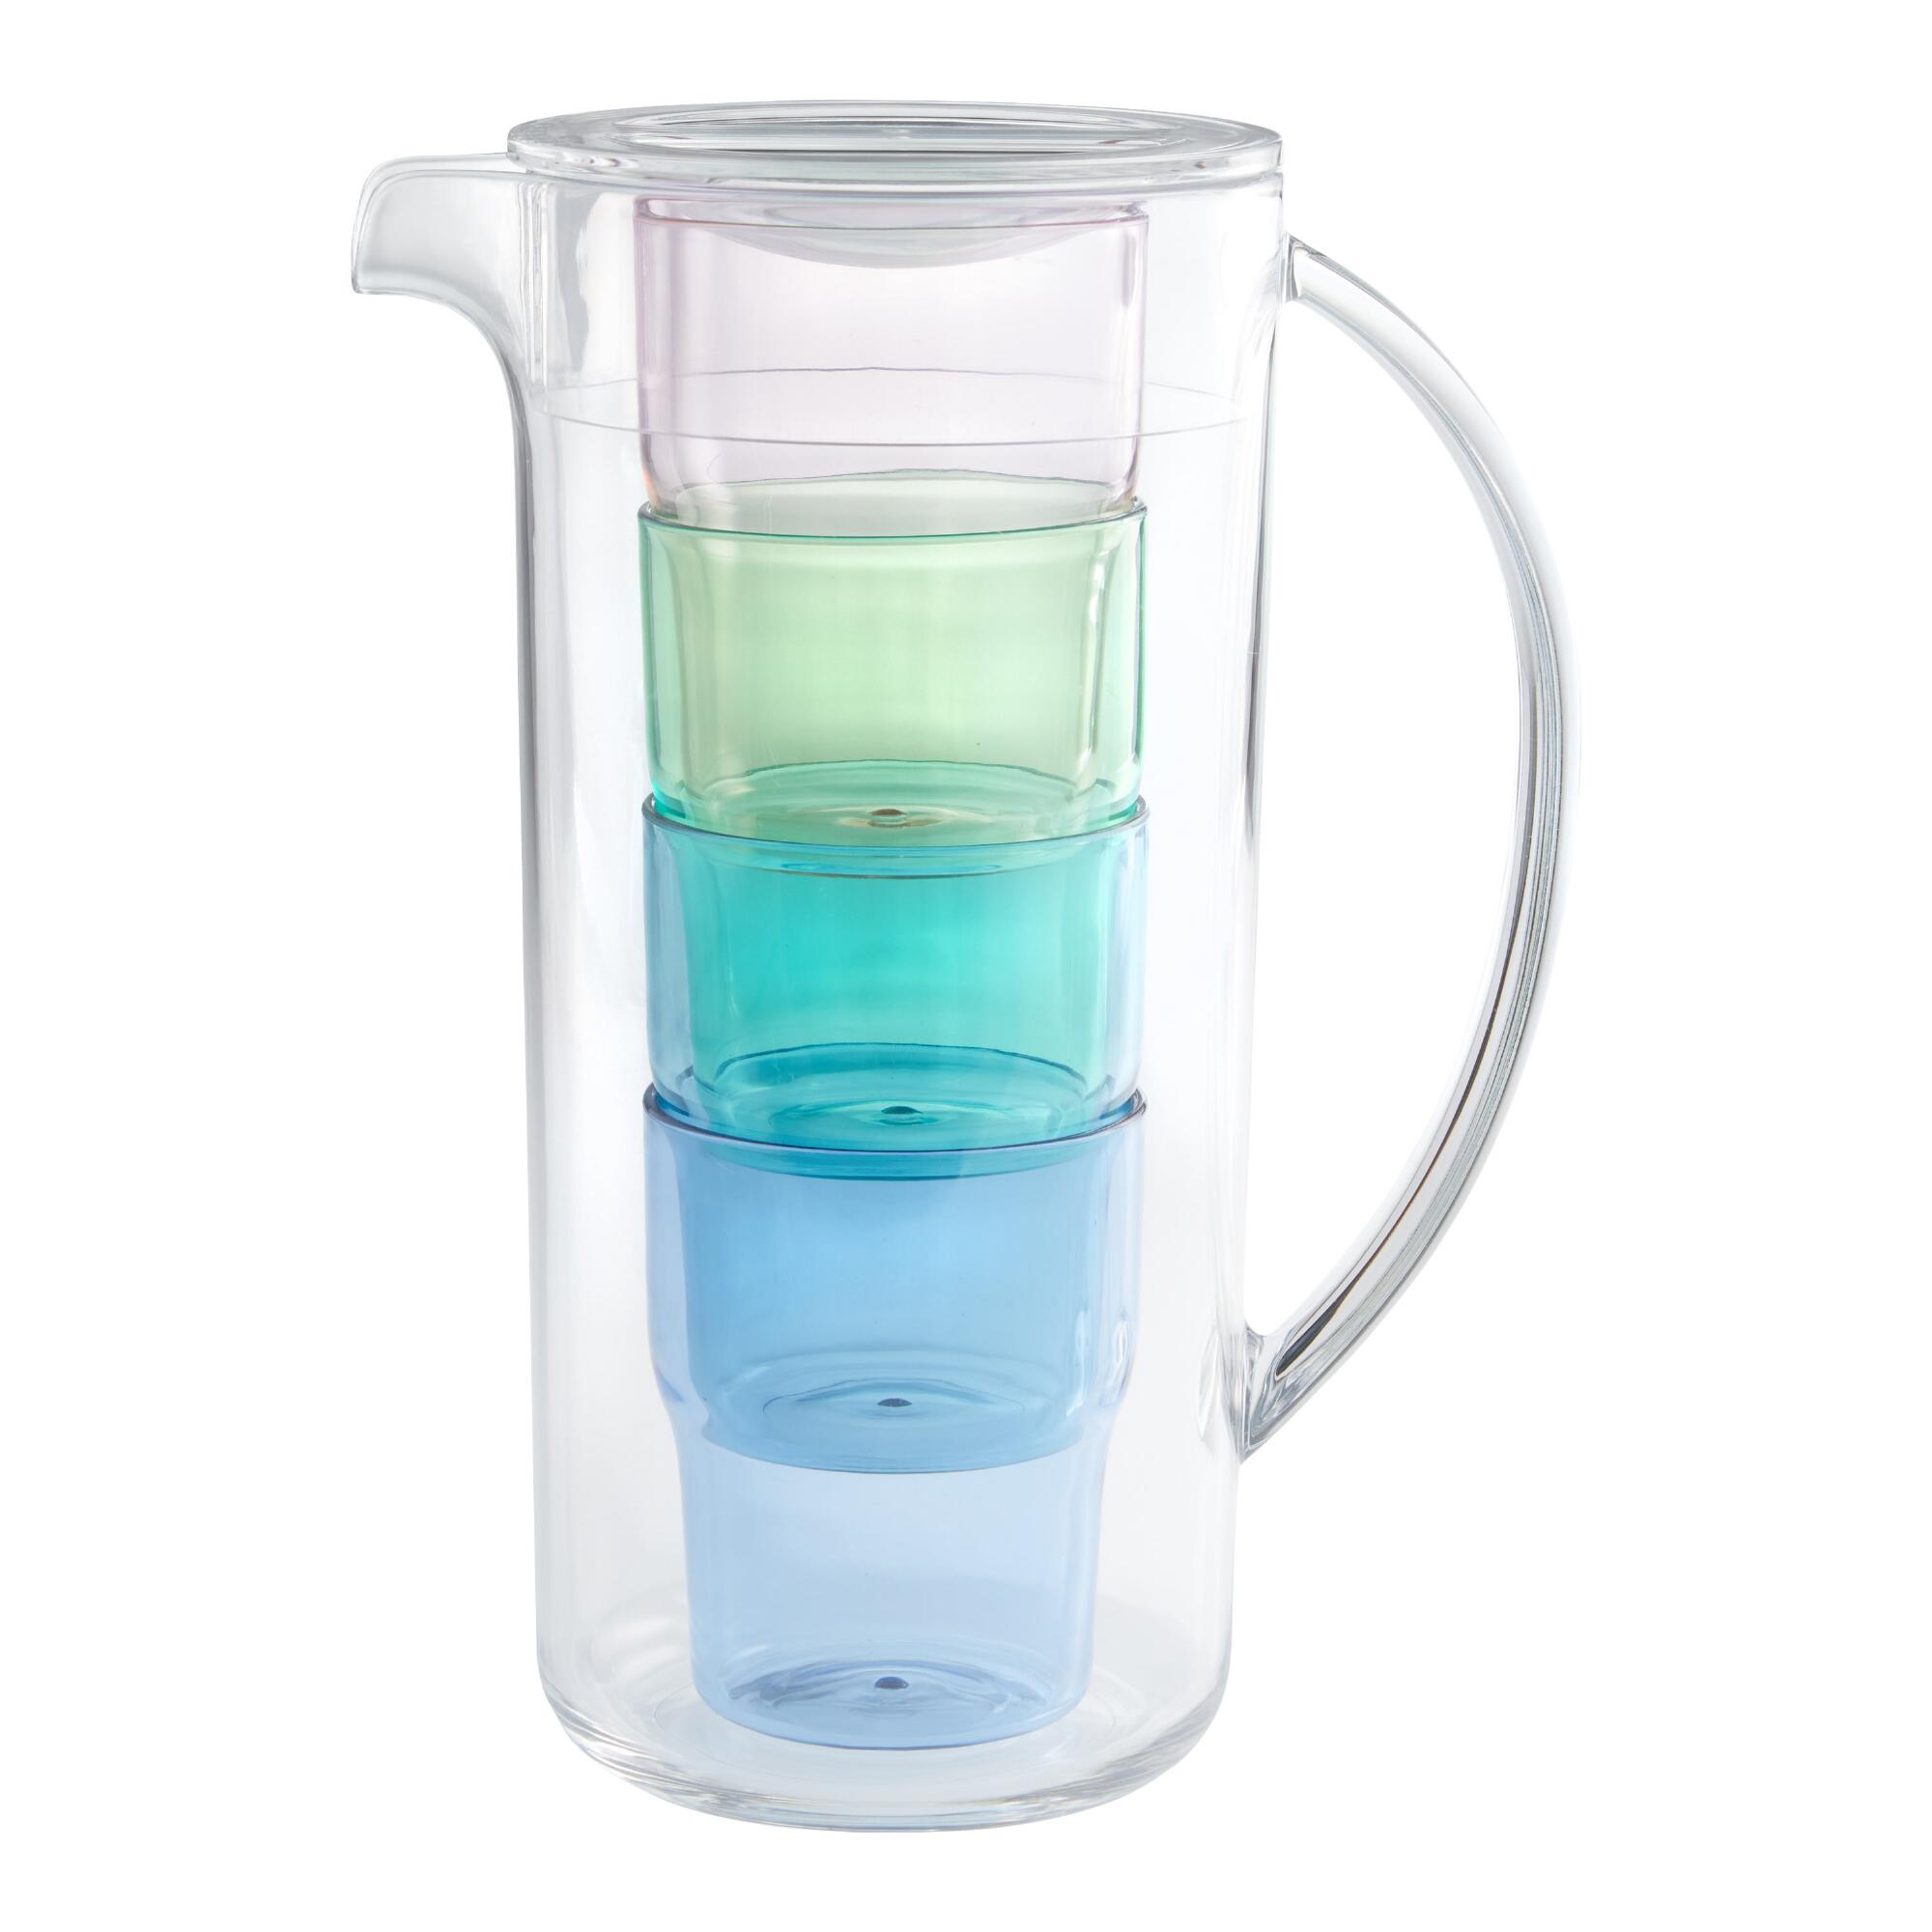 Mint Pantry Cecilio Beverage Pitcher - Color: Clear